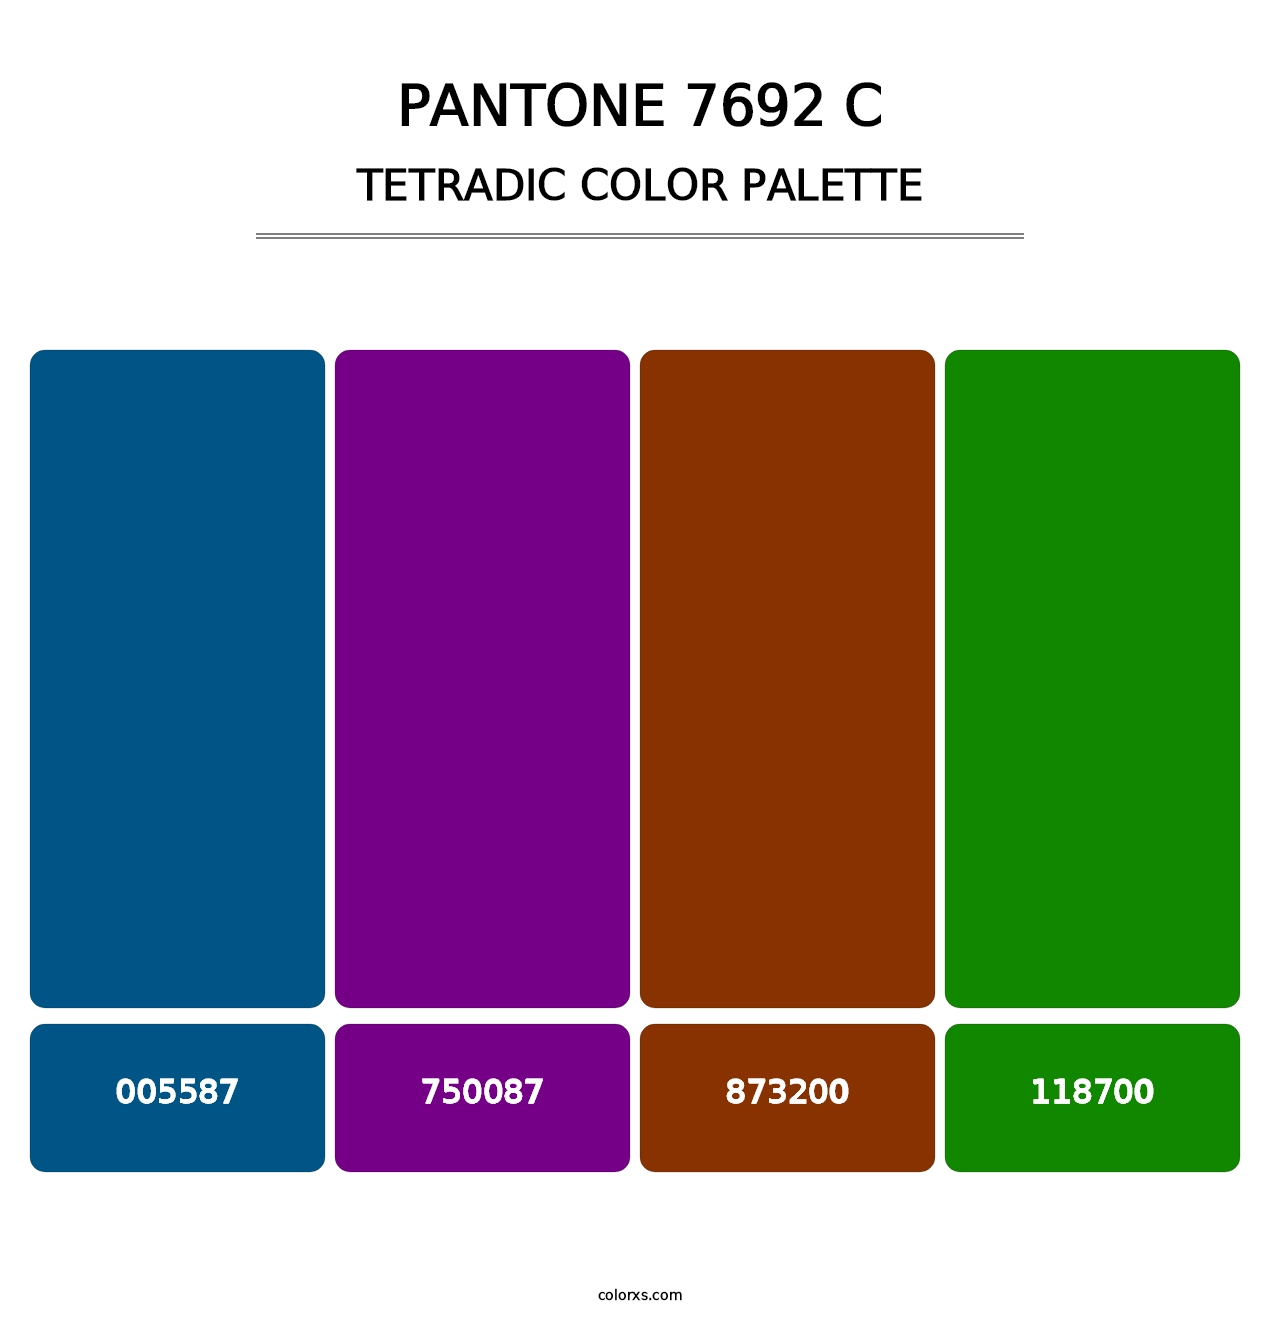 PANTONE 7692 C - Tetradic Color Palette